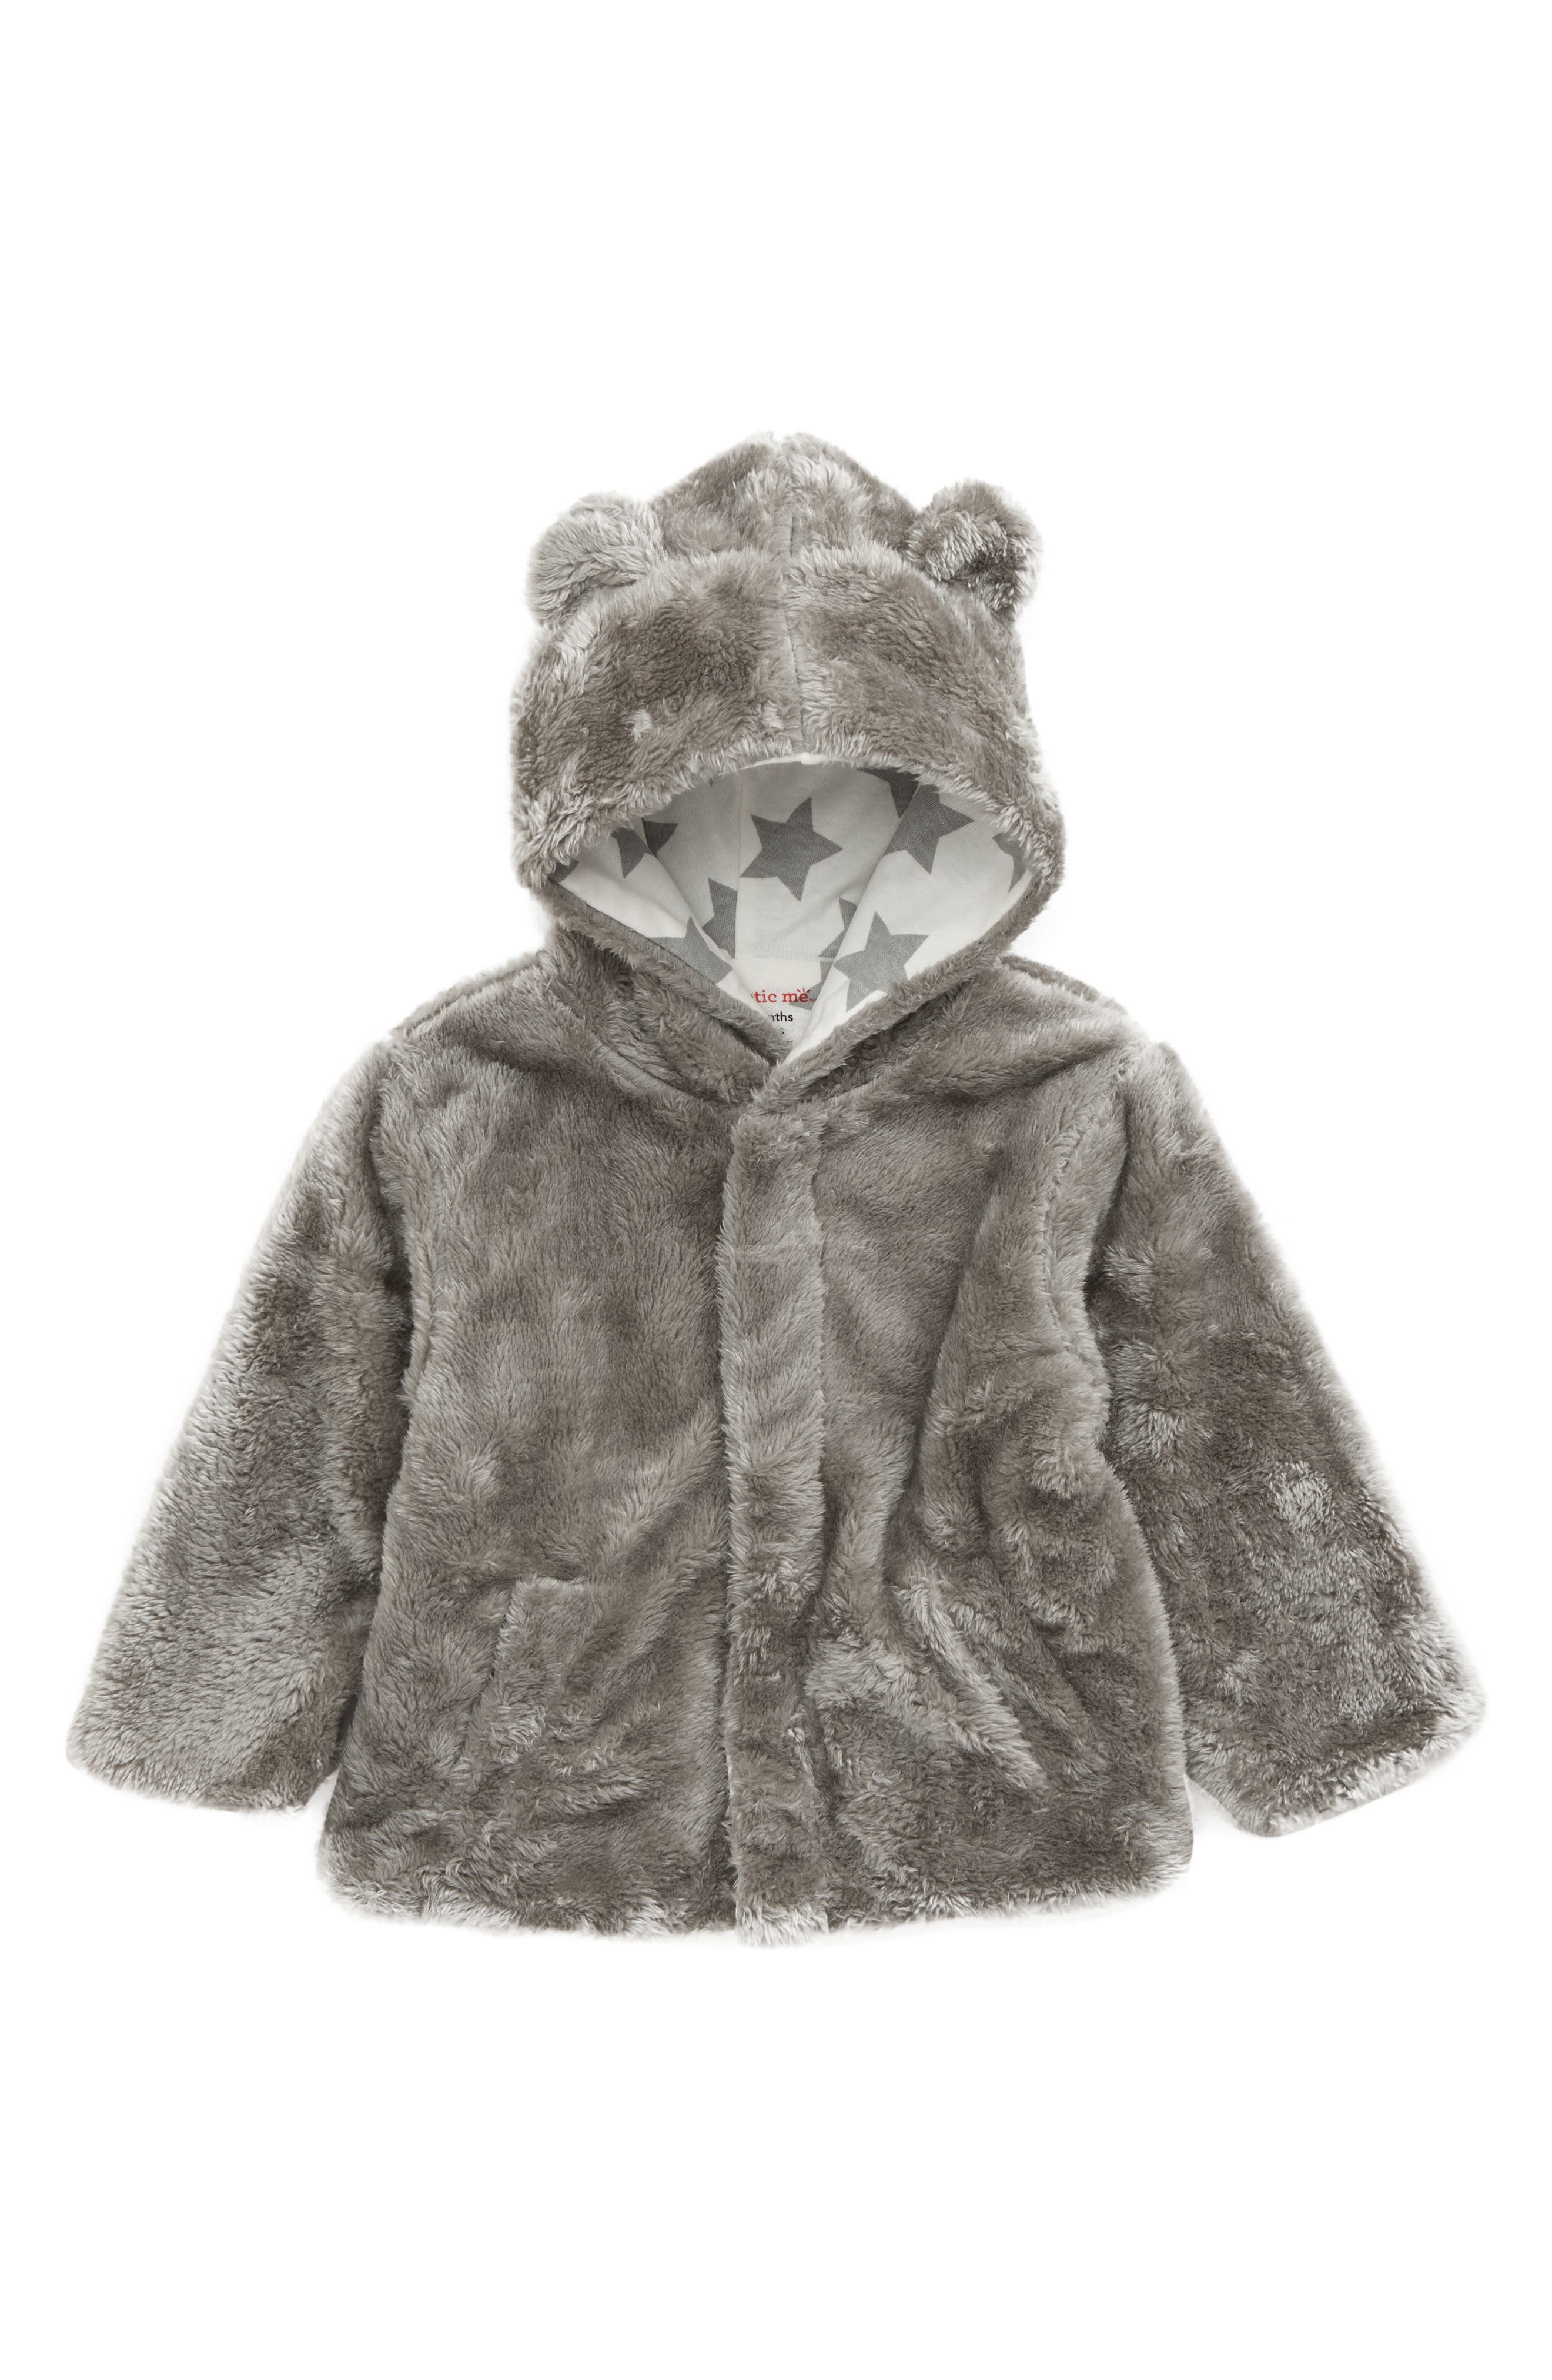 fur jacket for baby boy